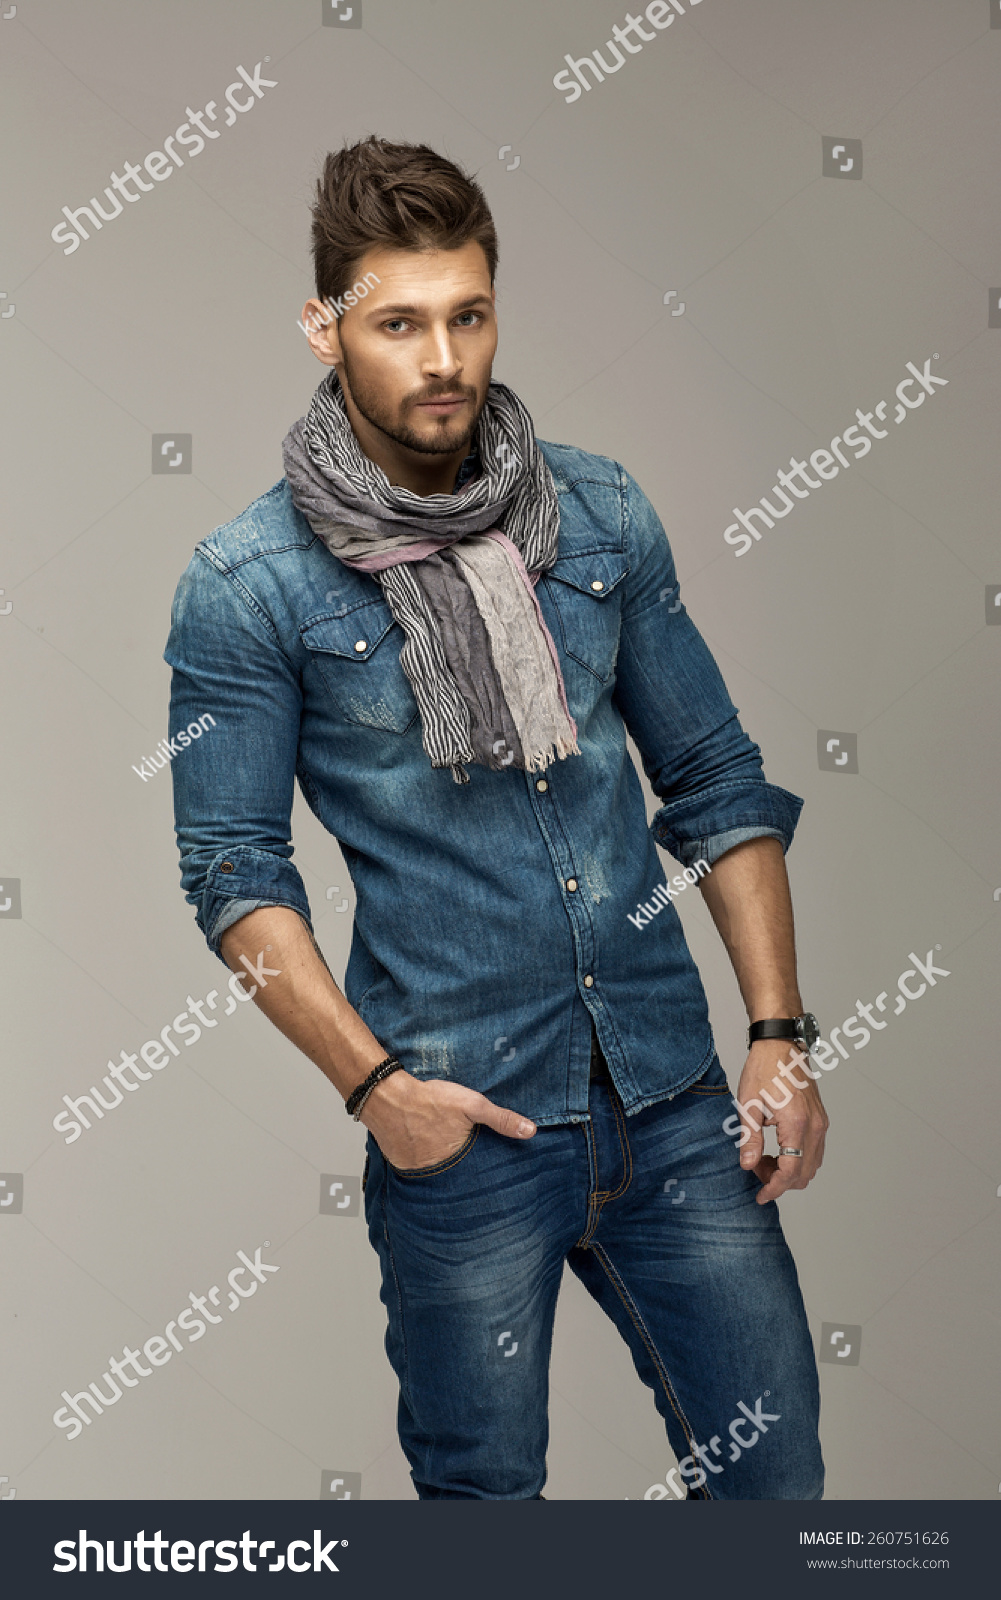 Handsome Man Wearing Jeans Stock Photo 260751626 : Shutterstock